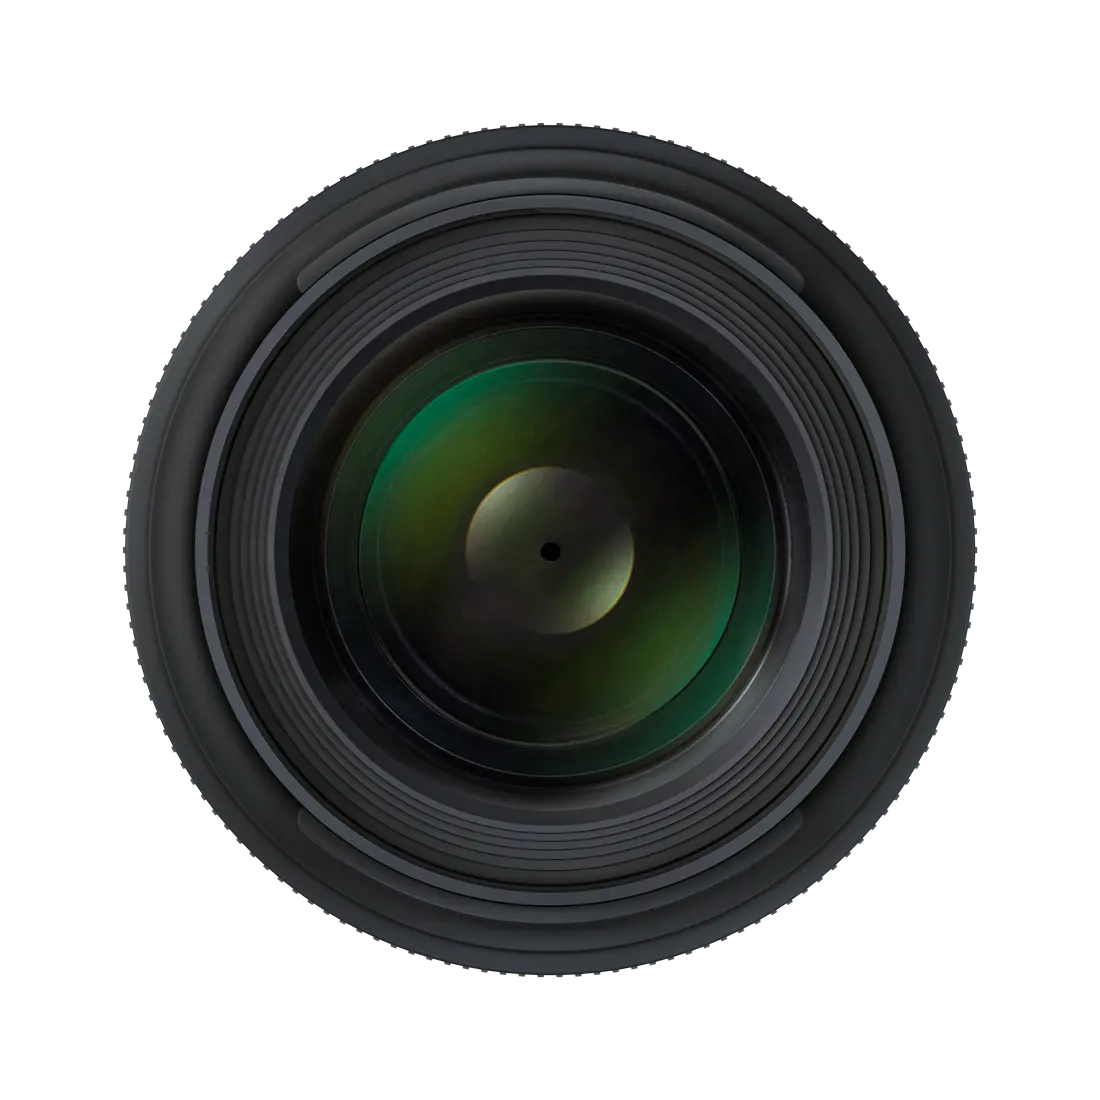 Used zoom mirrorless micro single camera lens SP 90mm F /2.8 Di MACRO 1:1 VC USD fixed focus macro lens